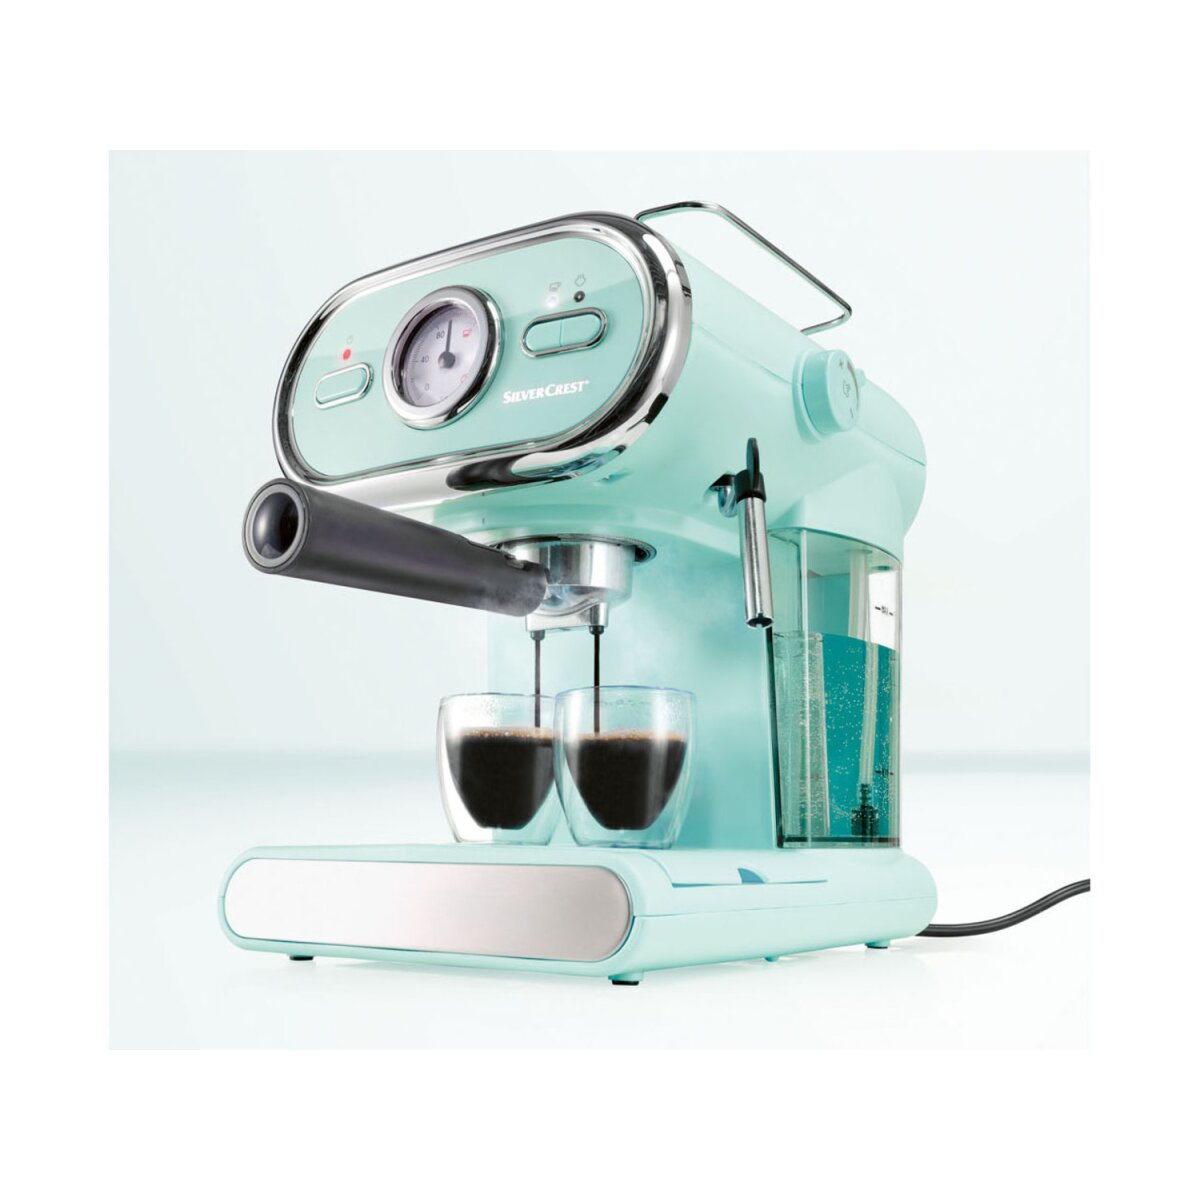 Pastell B-Ware 1100 Espressomaschine/Siebträger 49,99 SILVERCREST® D3 SEM neuwertig, TOOLS - mint KITCHEN €